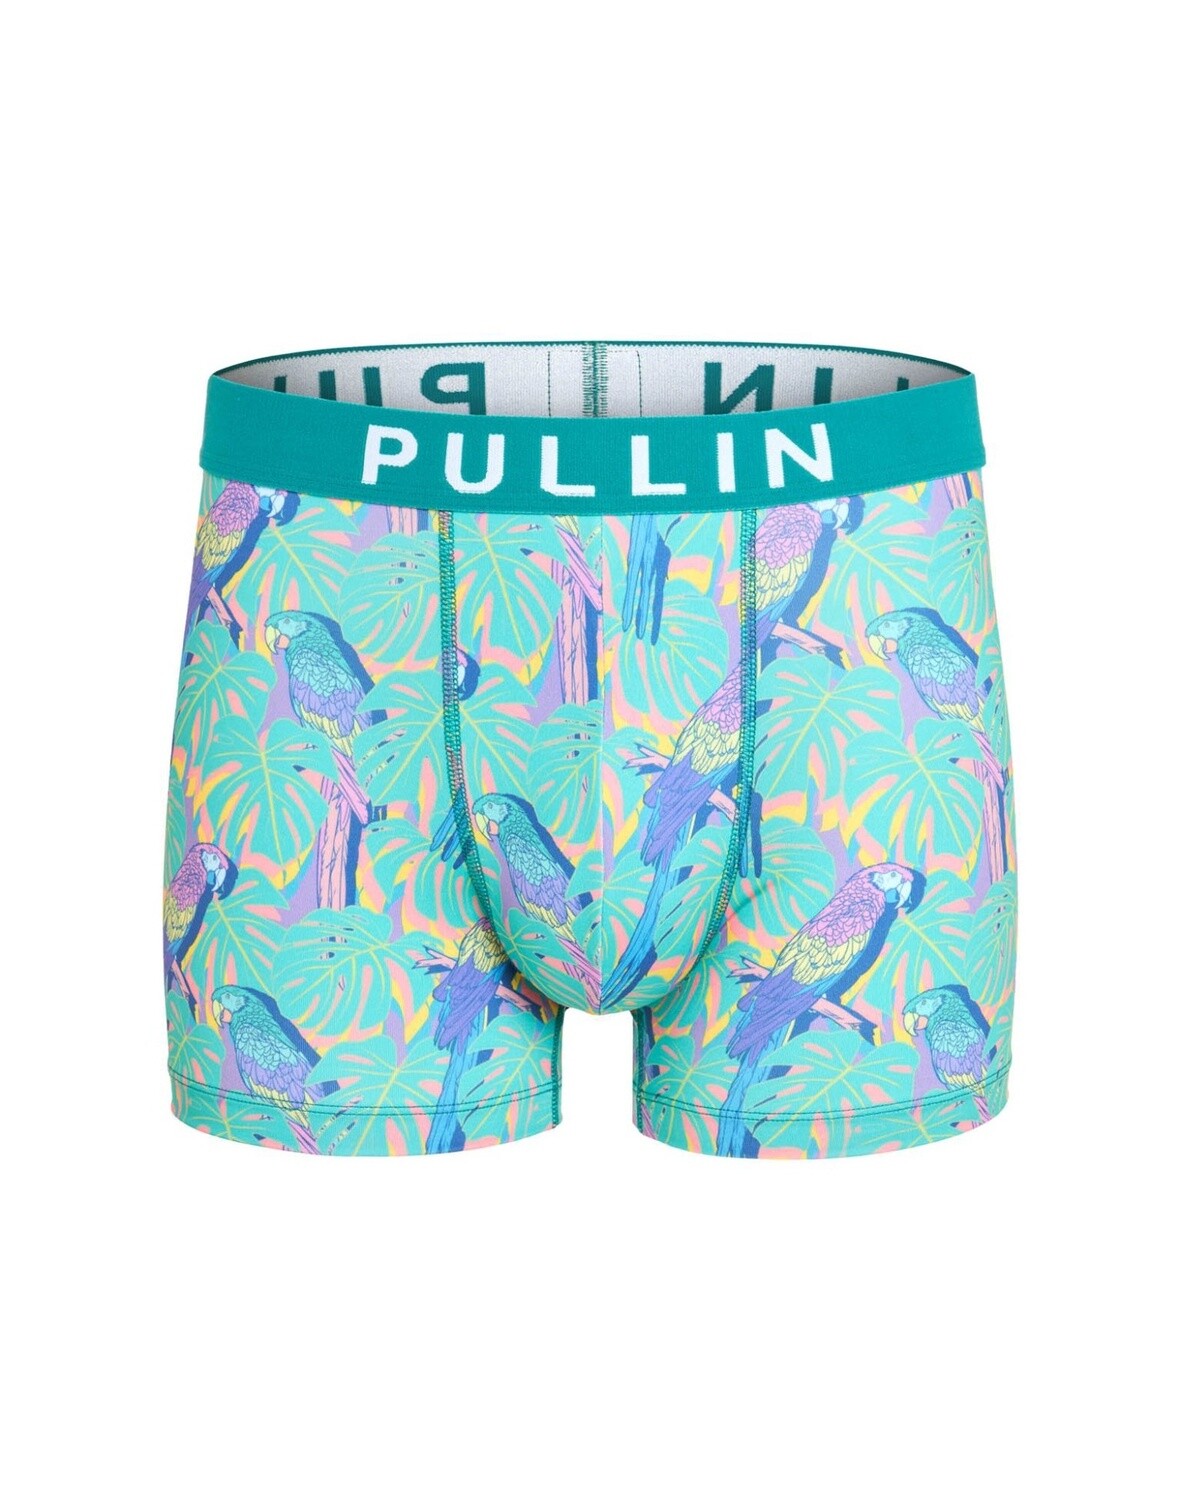 Pullin Underwear - Master - Miami80